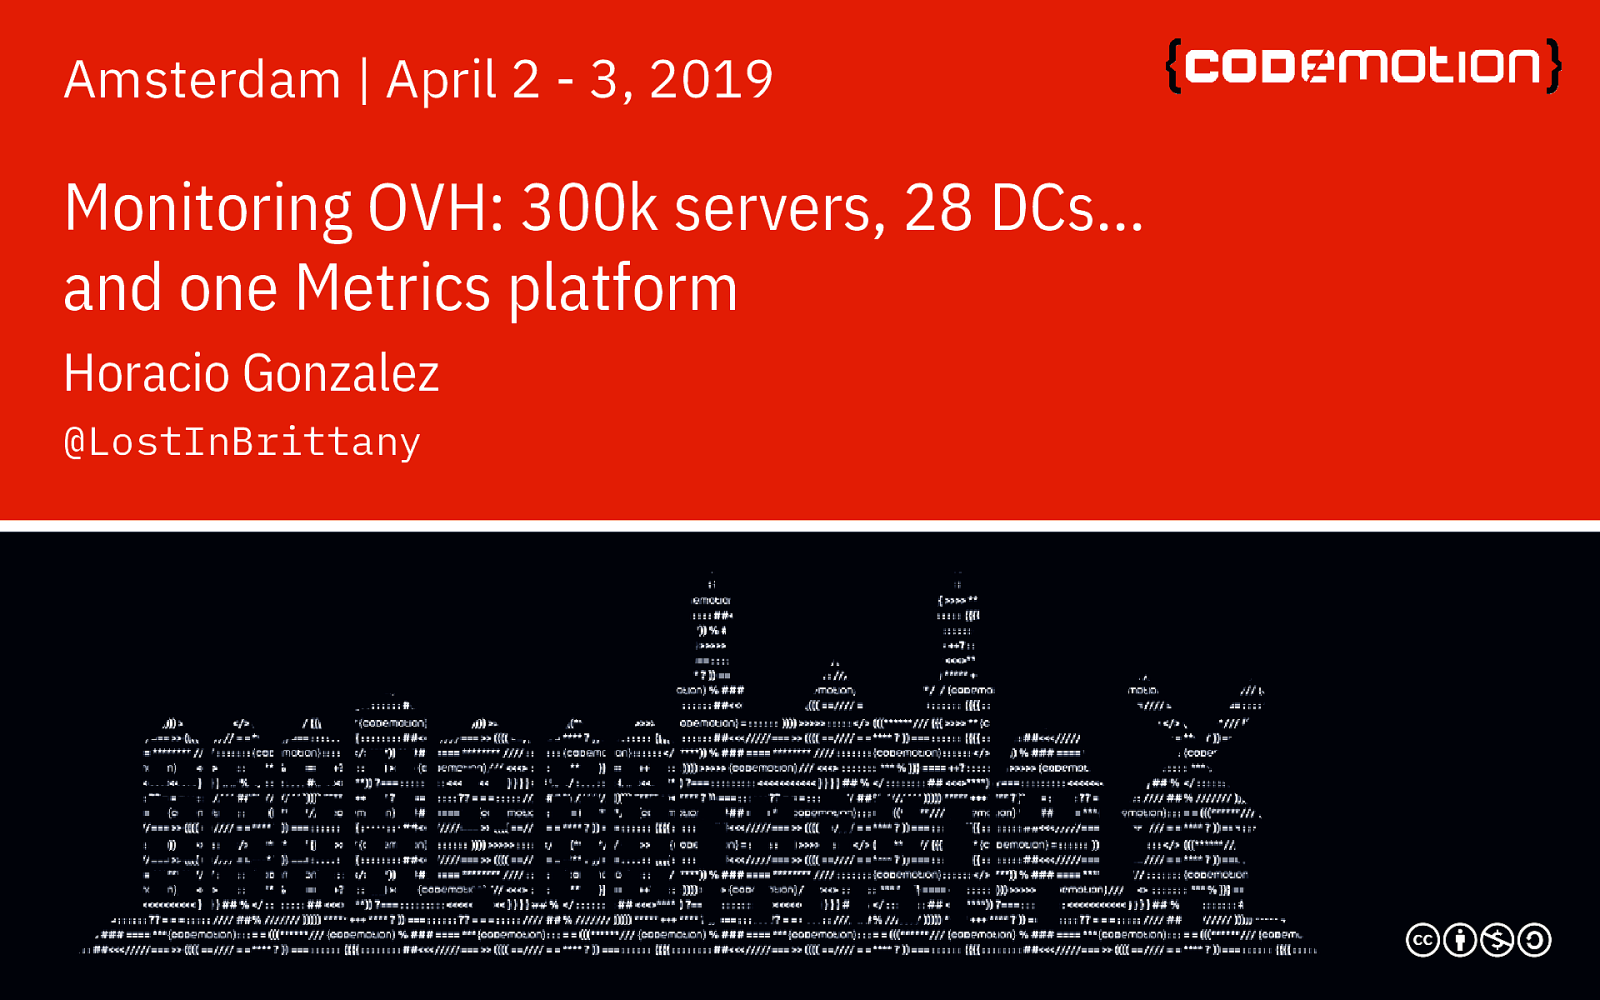 Monitoring OVH: 300k servers, 27 DCs and one Metrics platform